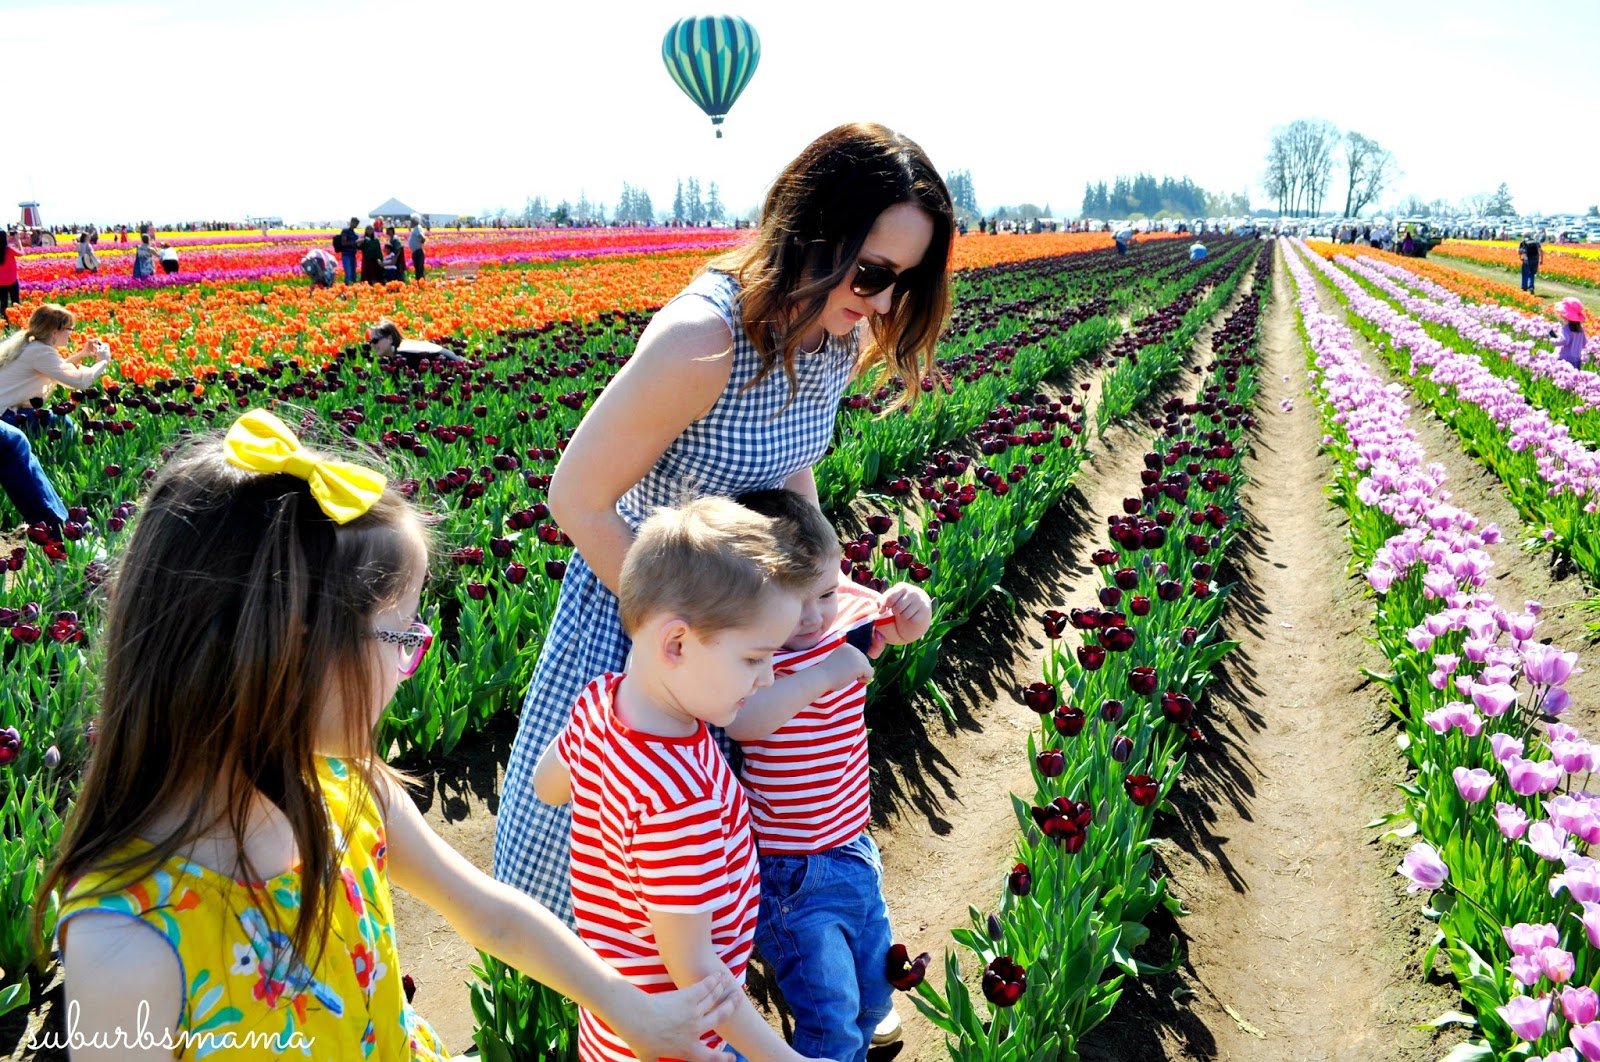 Suburbs Mama: Visit to the tulip farm...